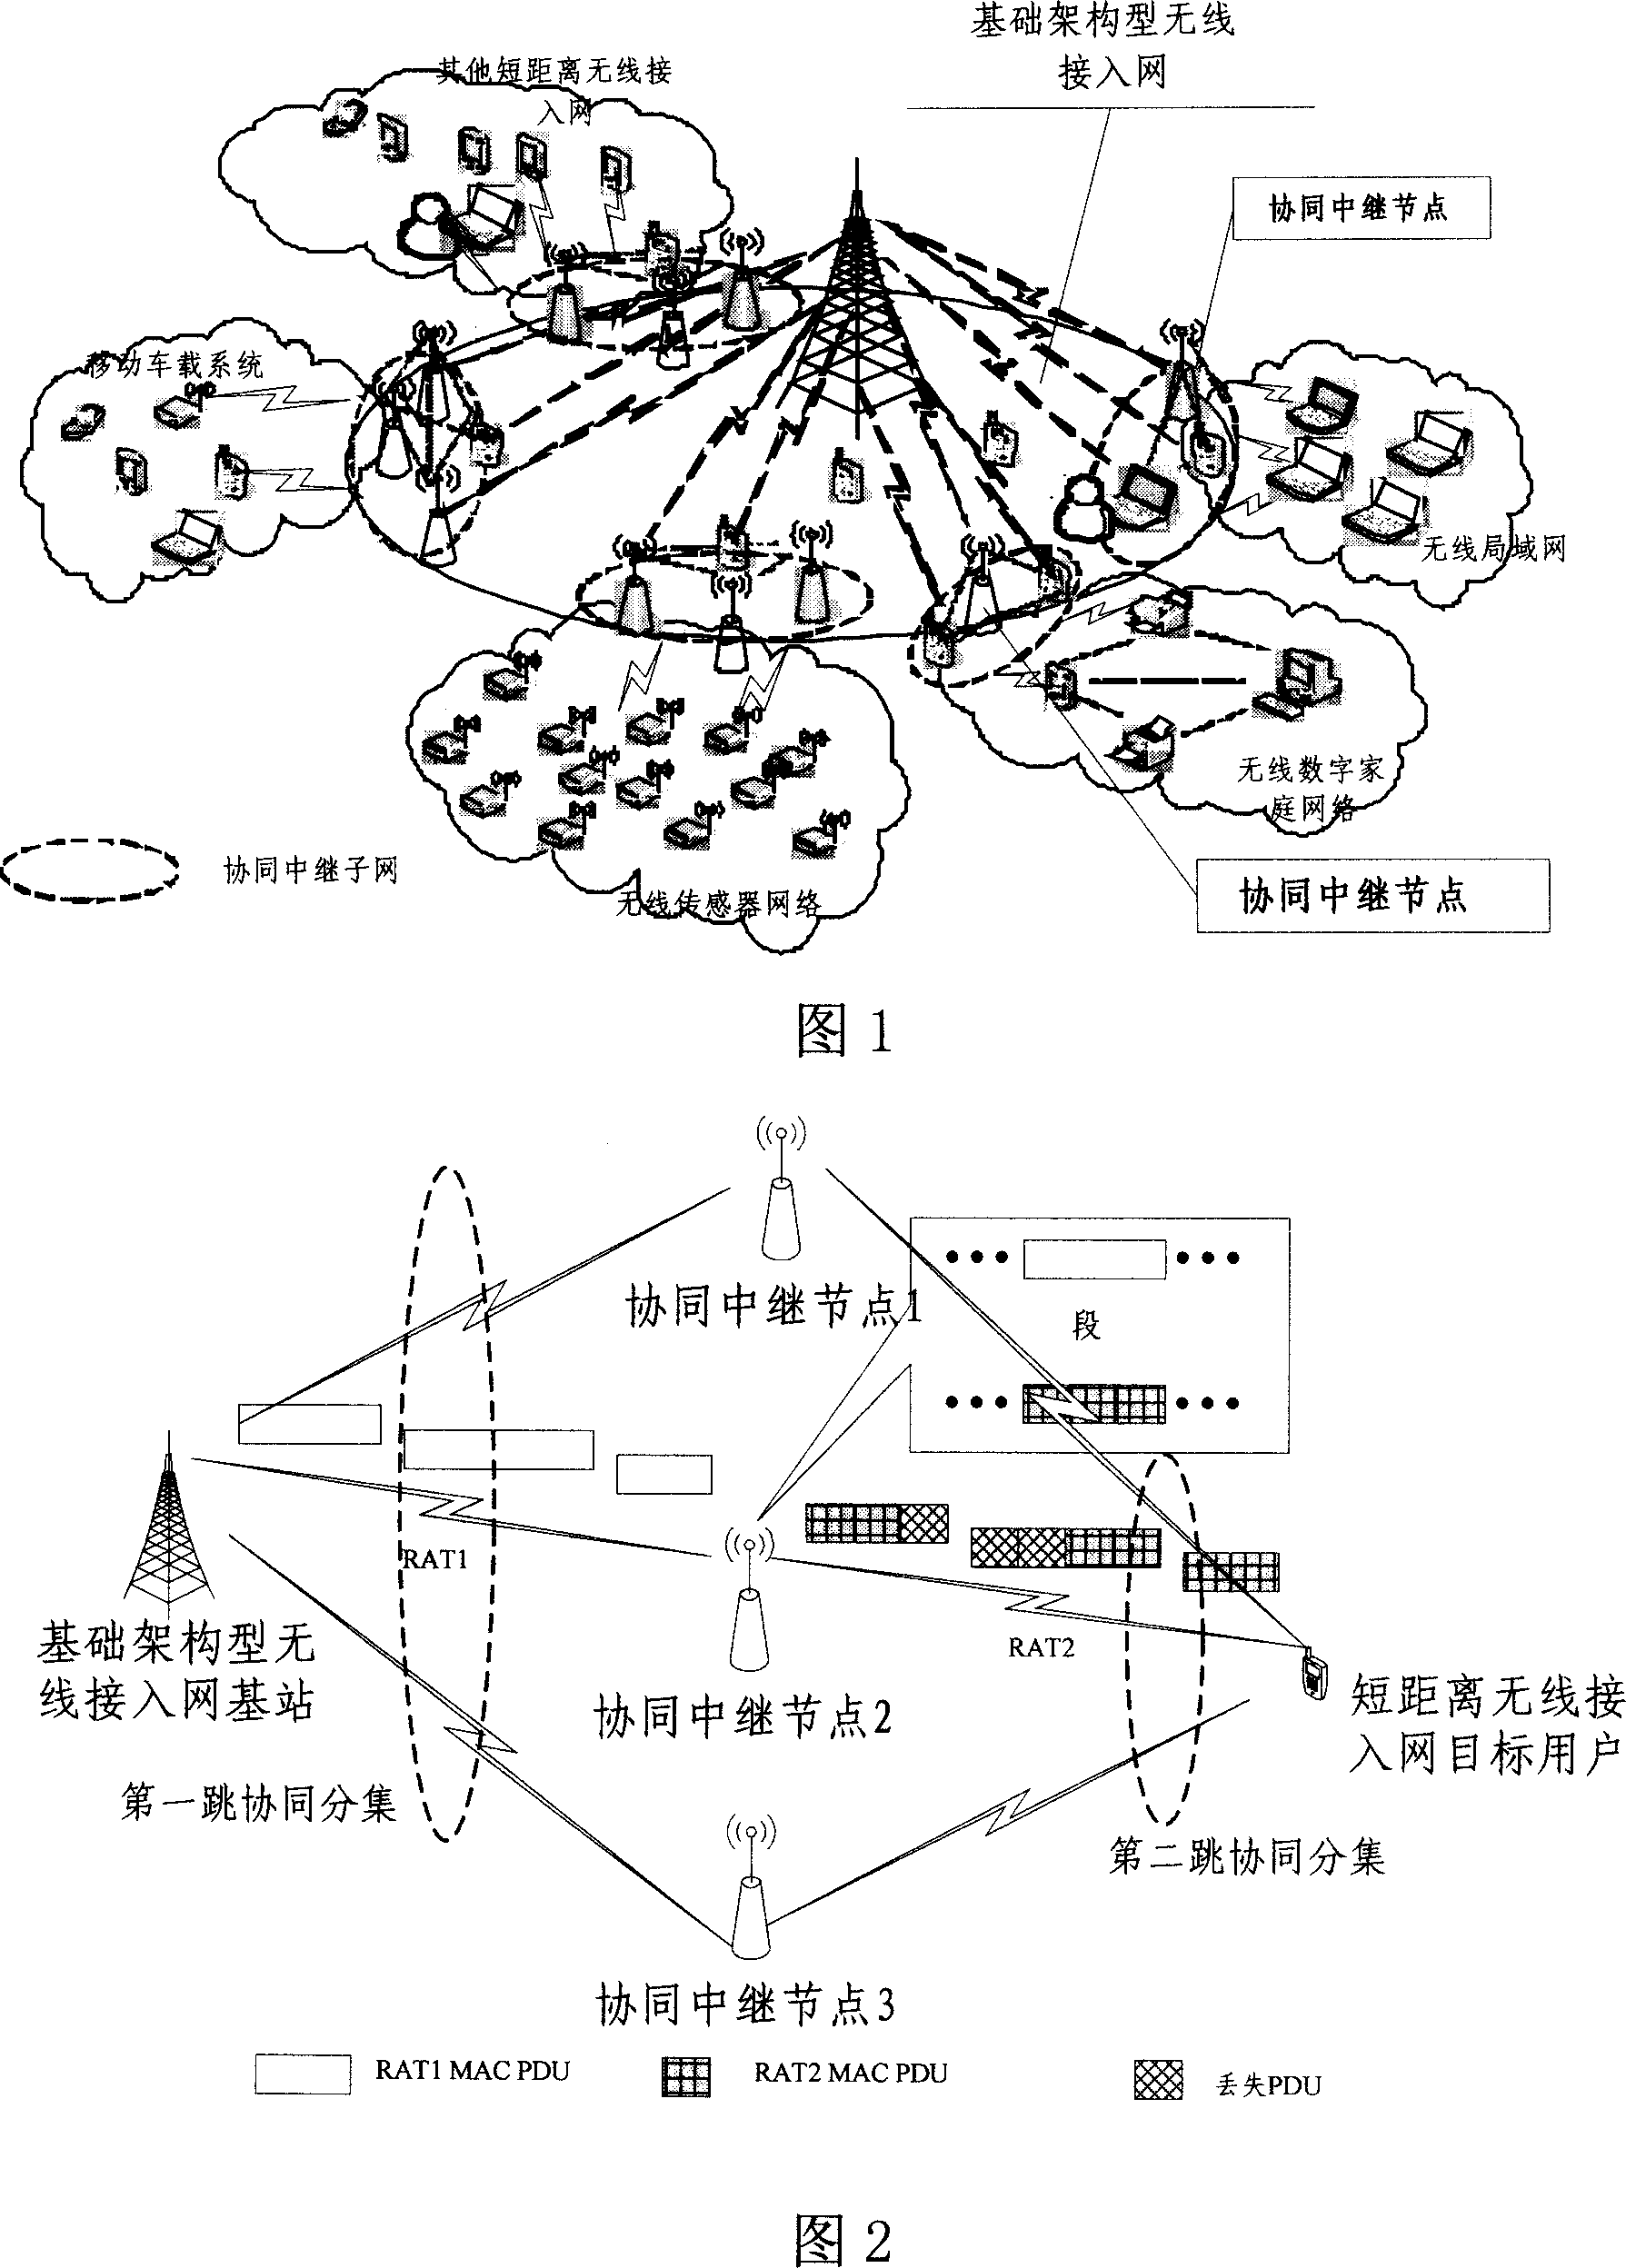 Novel method for wireless communication networking based on the cooperation mechanism